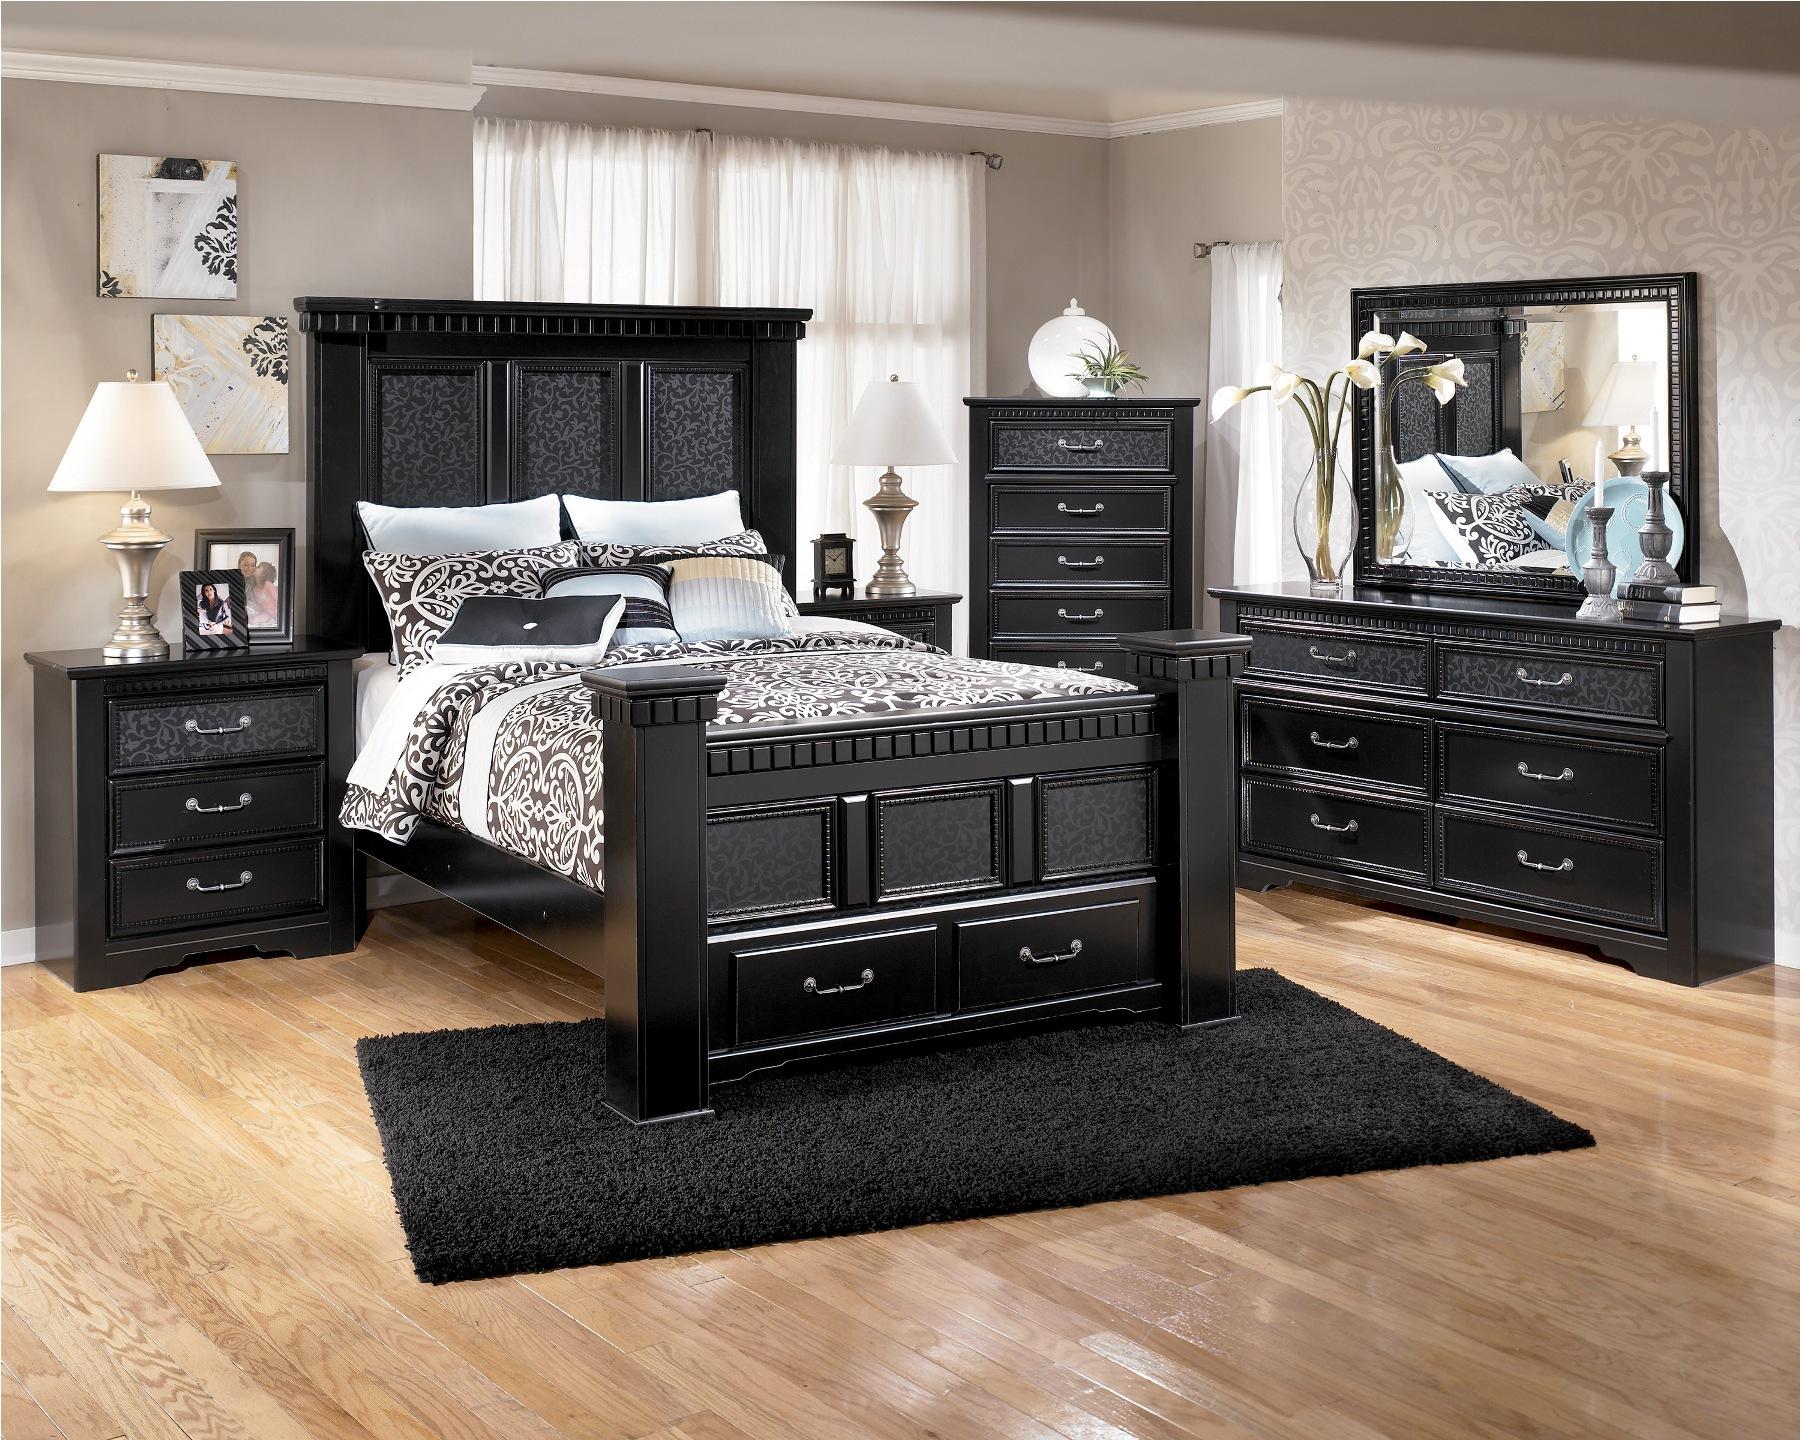 formal bedroom furniture ideas